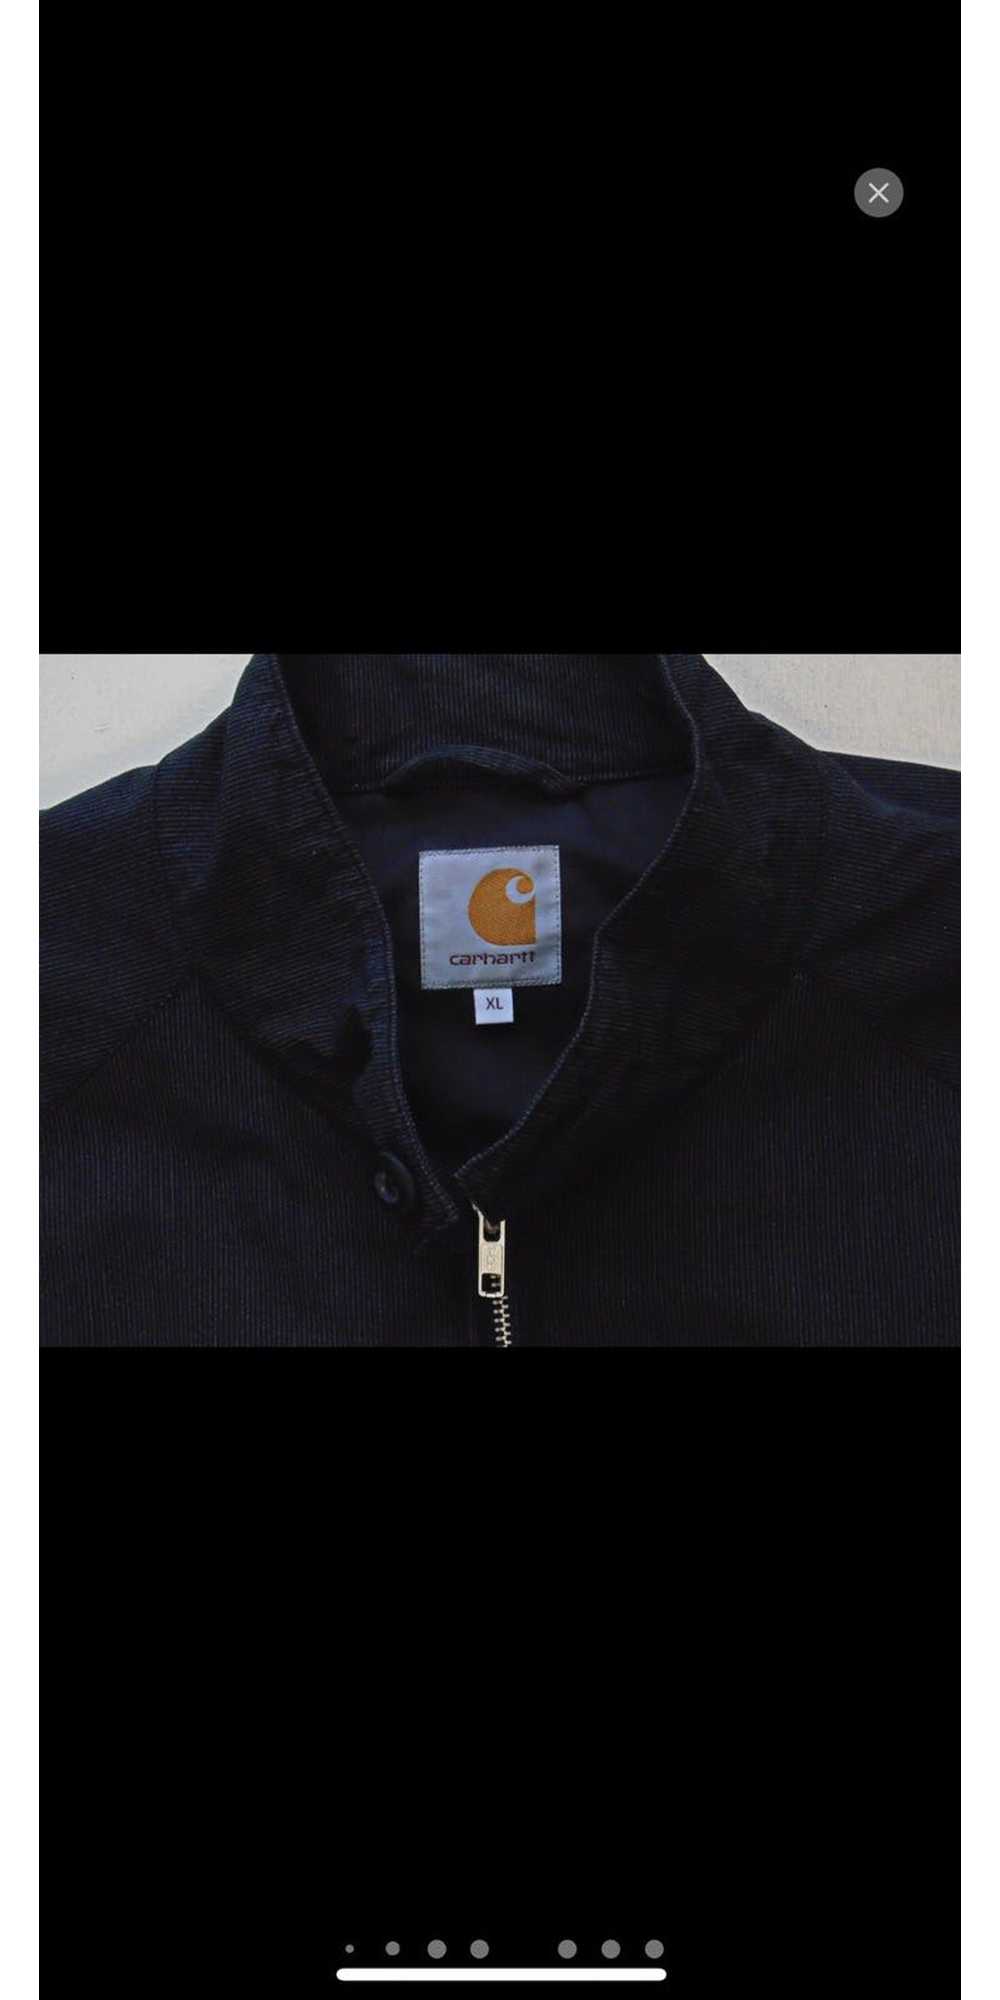 Carhartt Carhartt Rude jacket - image 2